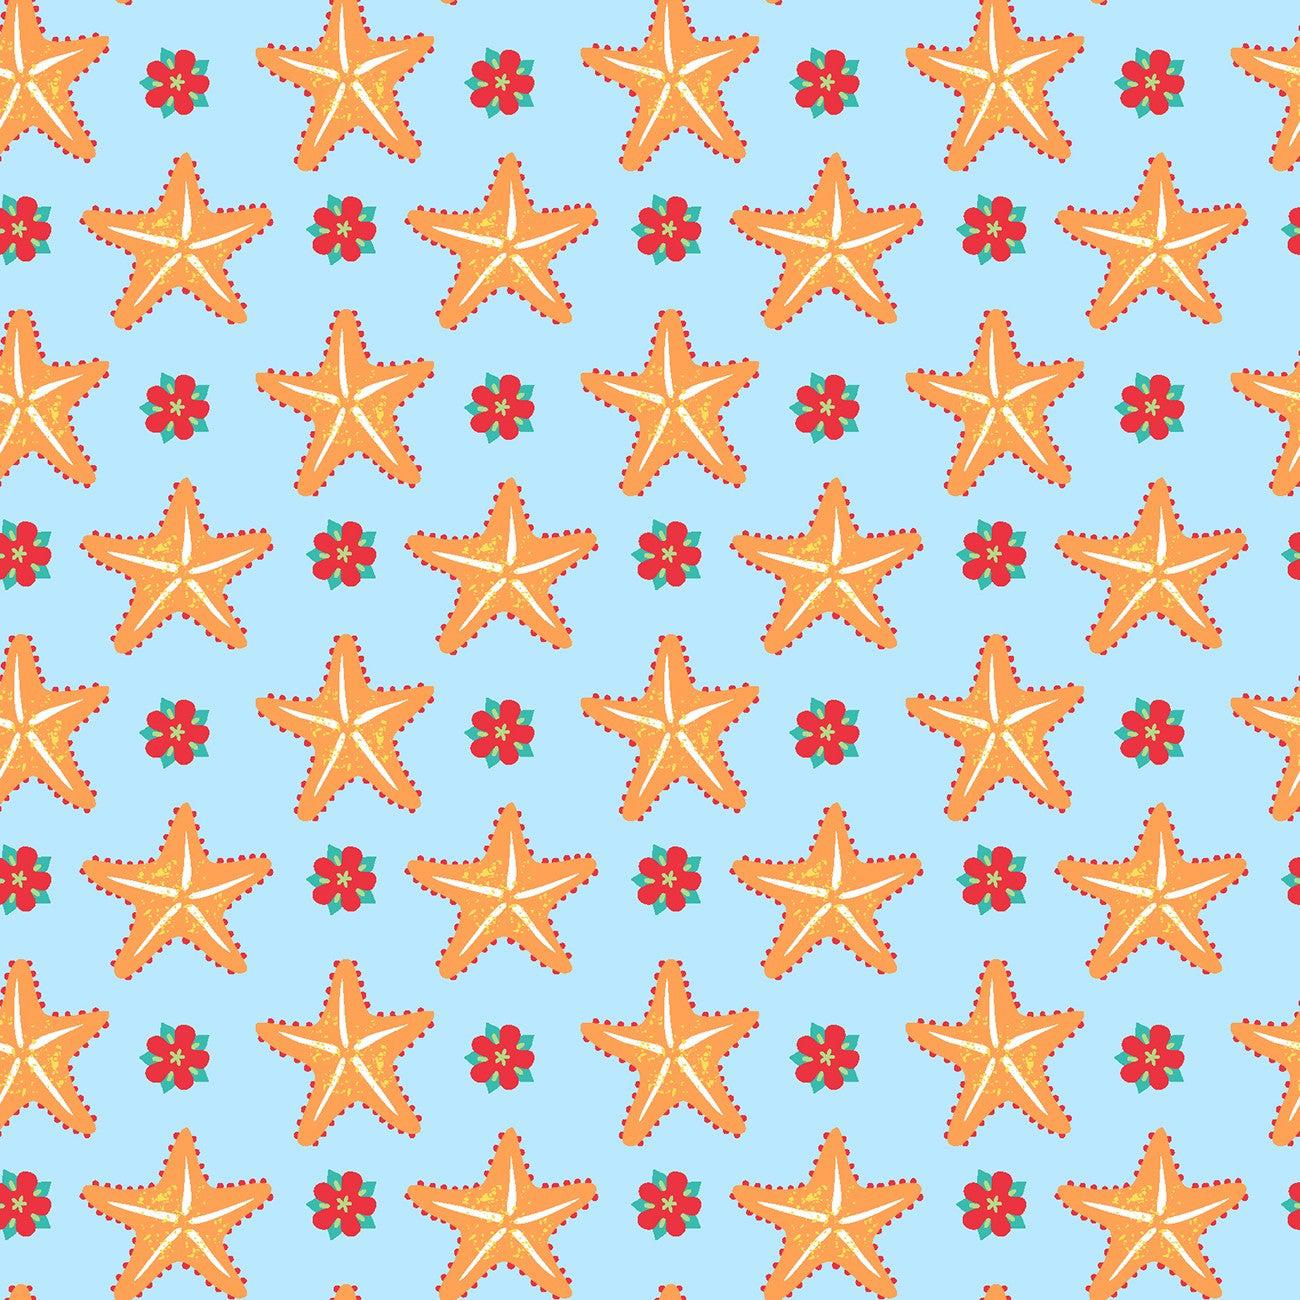 blue starfish wallpaper